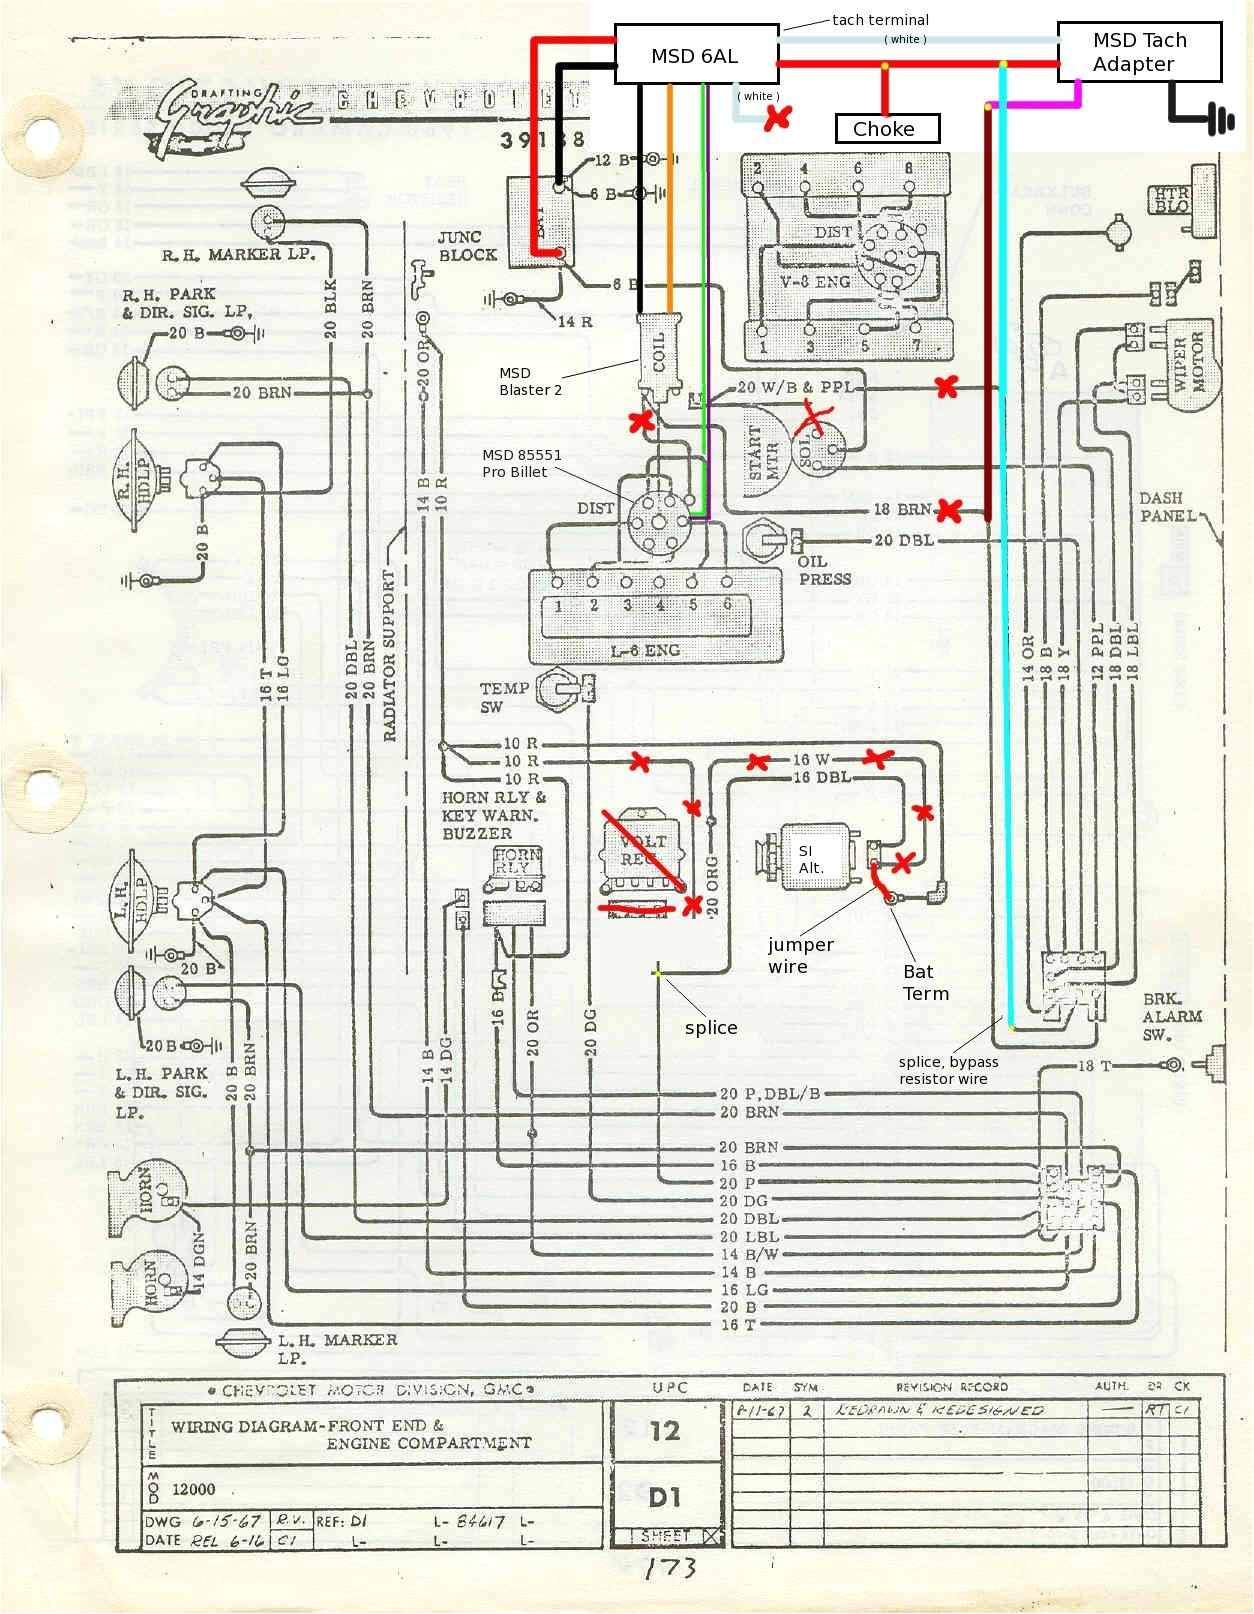 1967 camaro alternator wiring harness free download wiring diagram 1967 camaro wiring diagram free wiring diagram